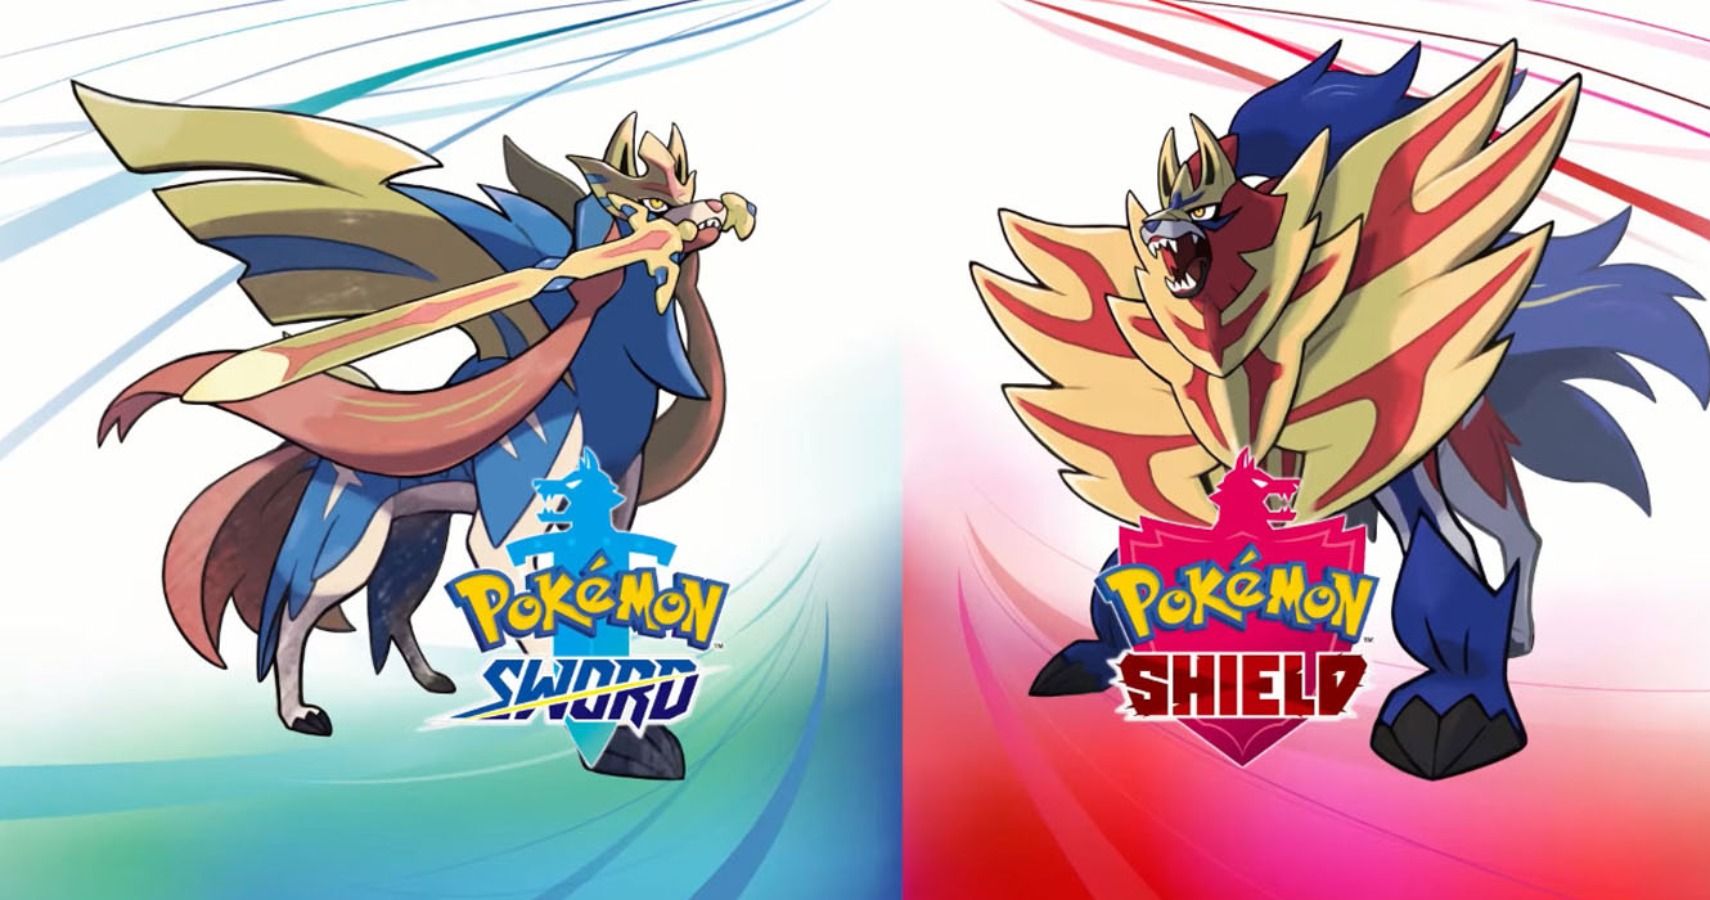 Pokemon Sword and Shield Cover